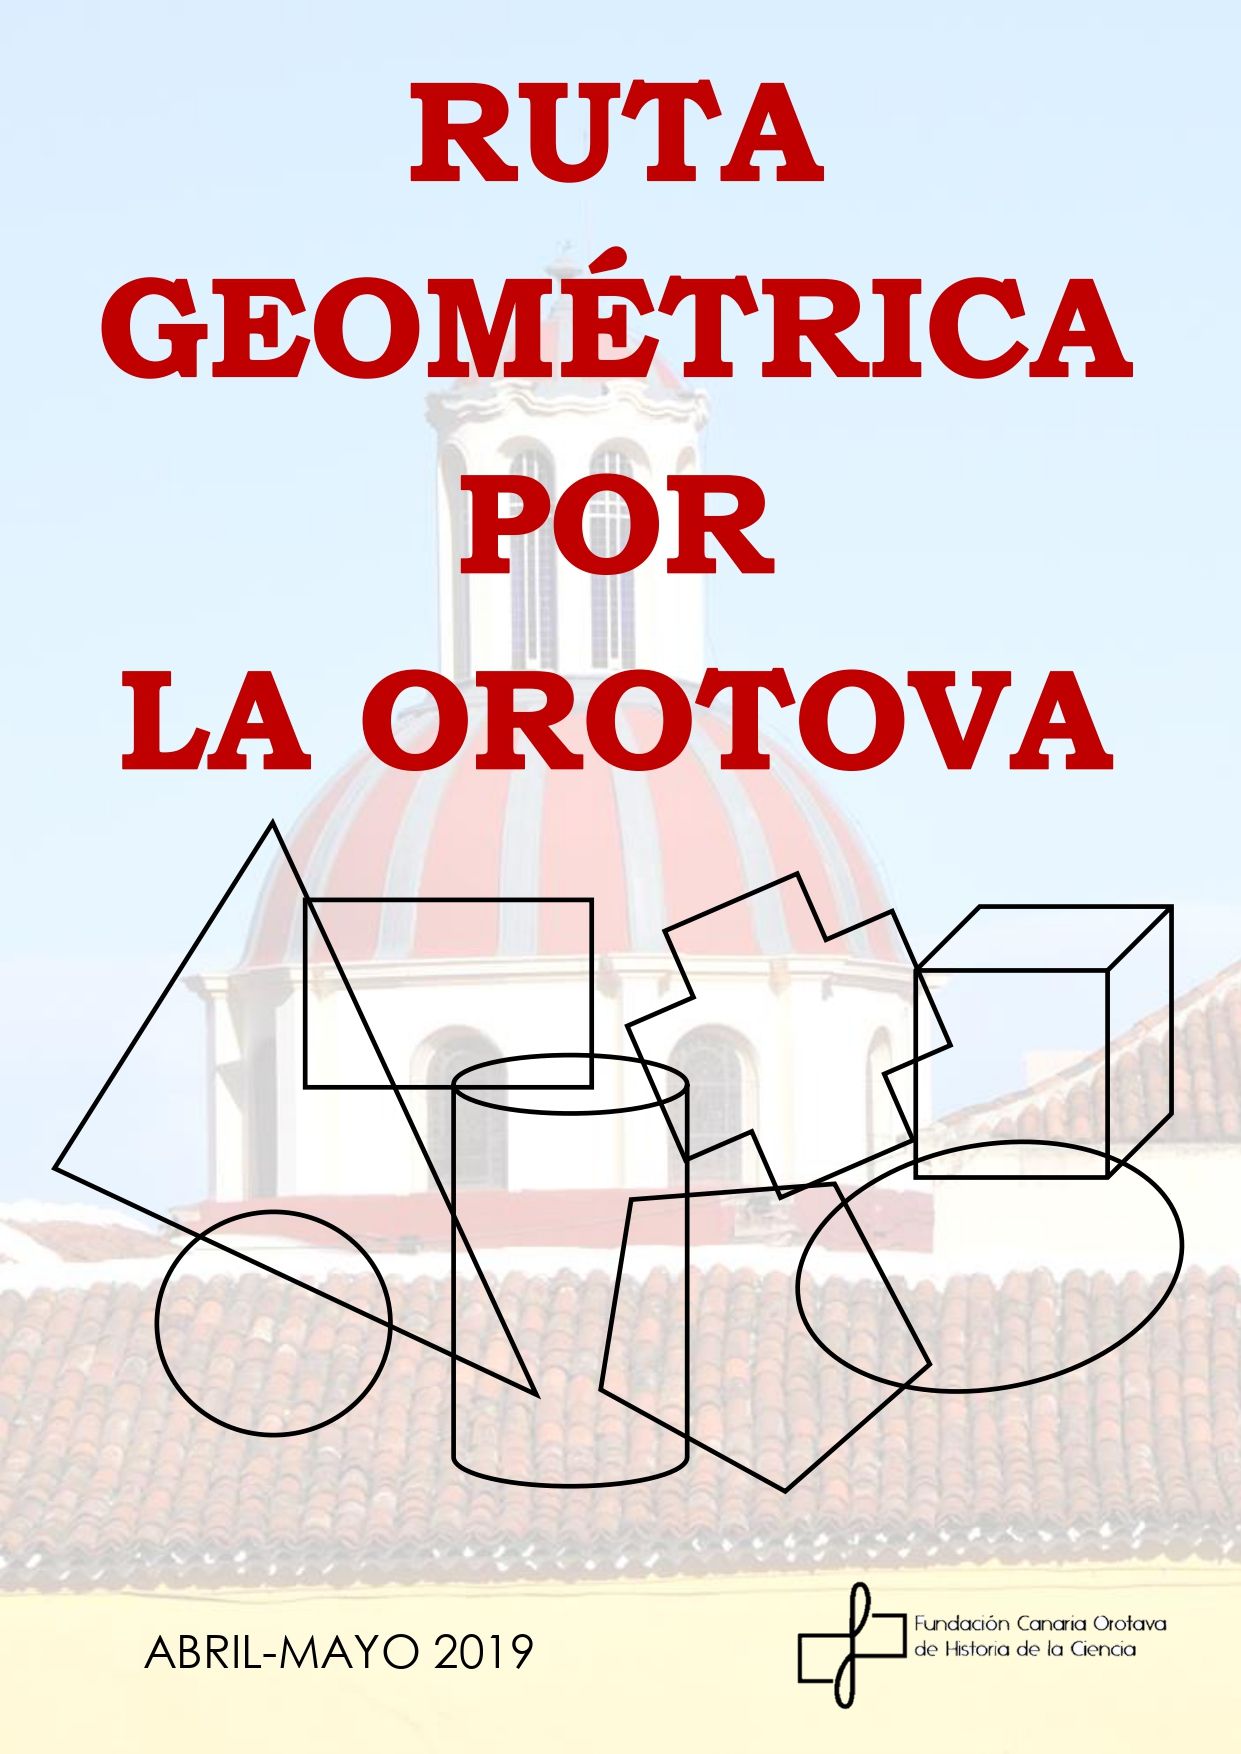 Cartel de la Ruta Geométrica por La Orotava 2019